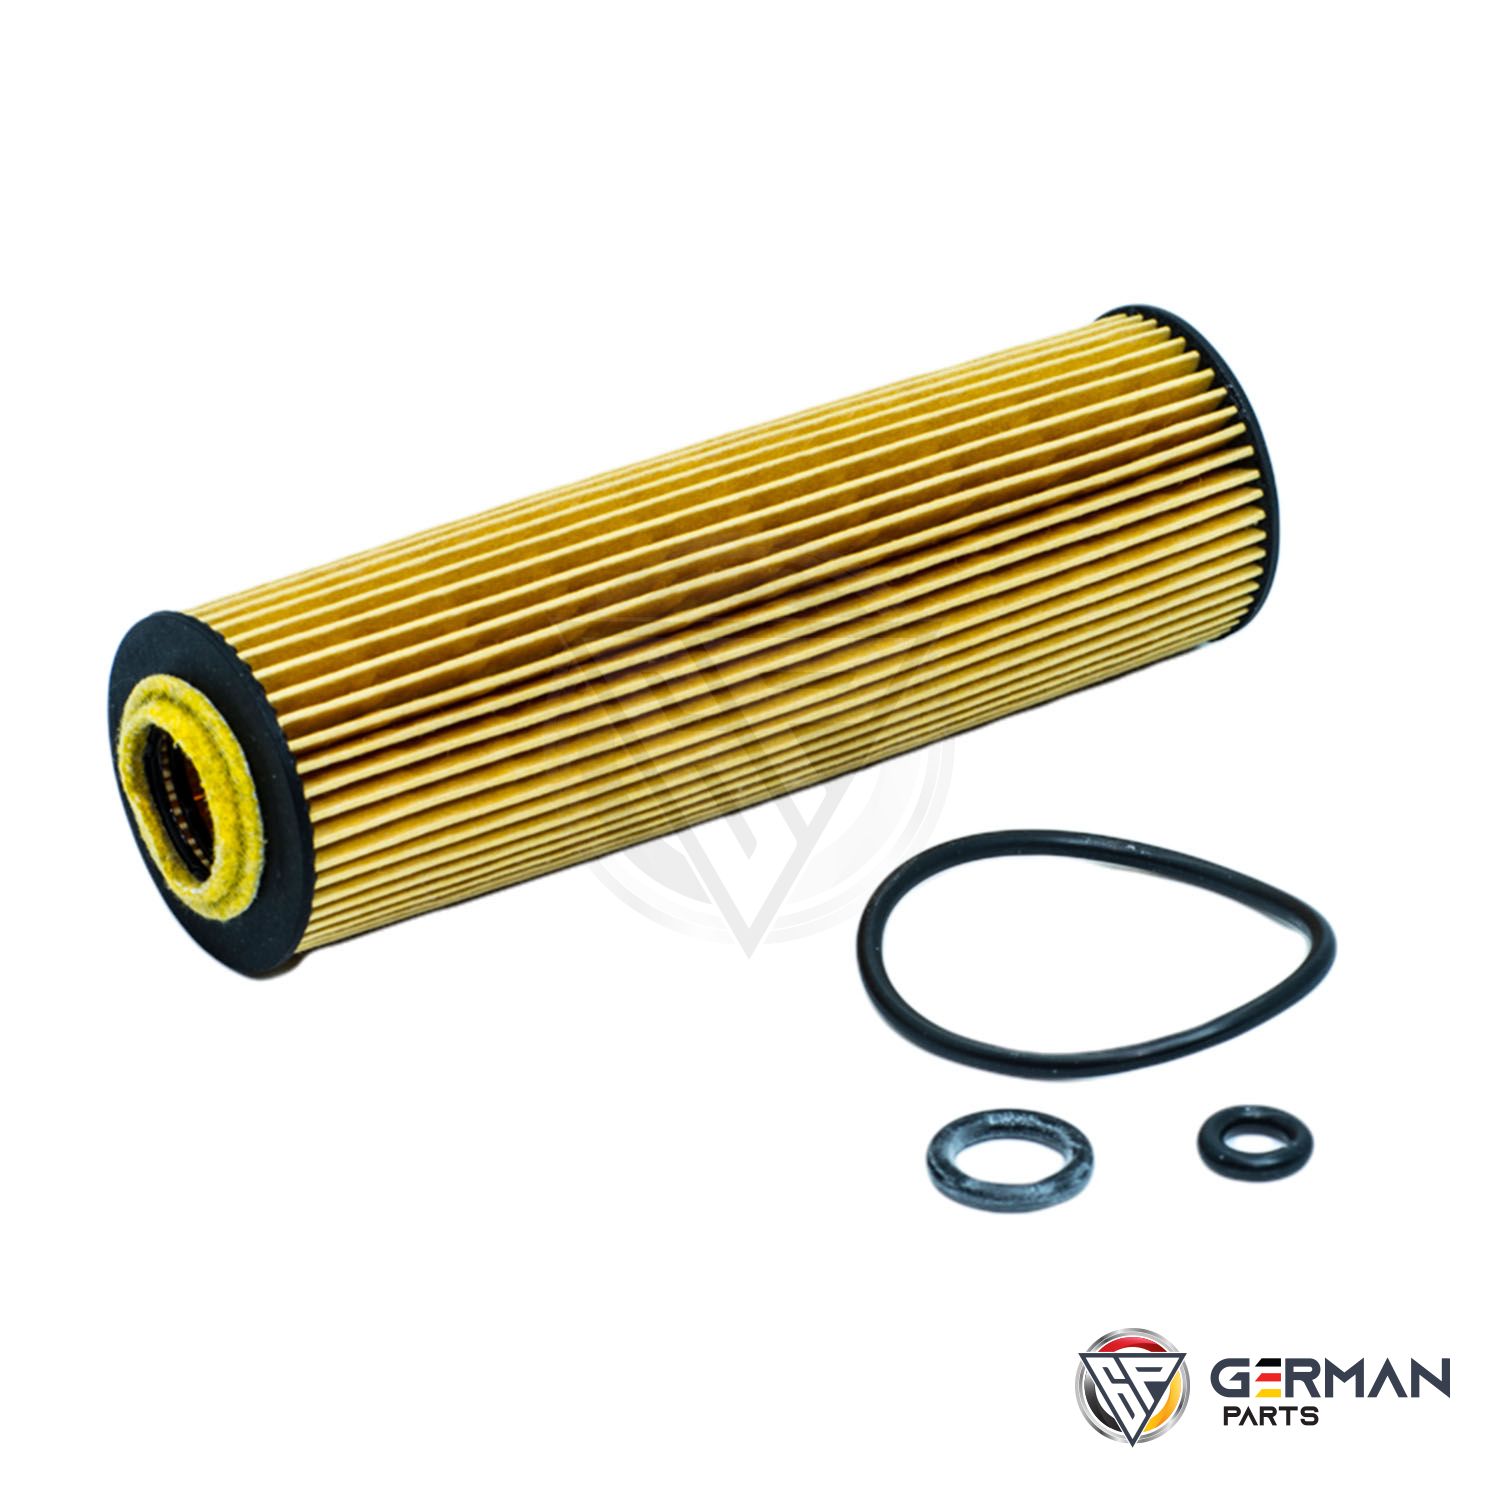 Buy Mercedes Benz Oil Filter 2711800109 - German Parts